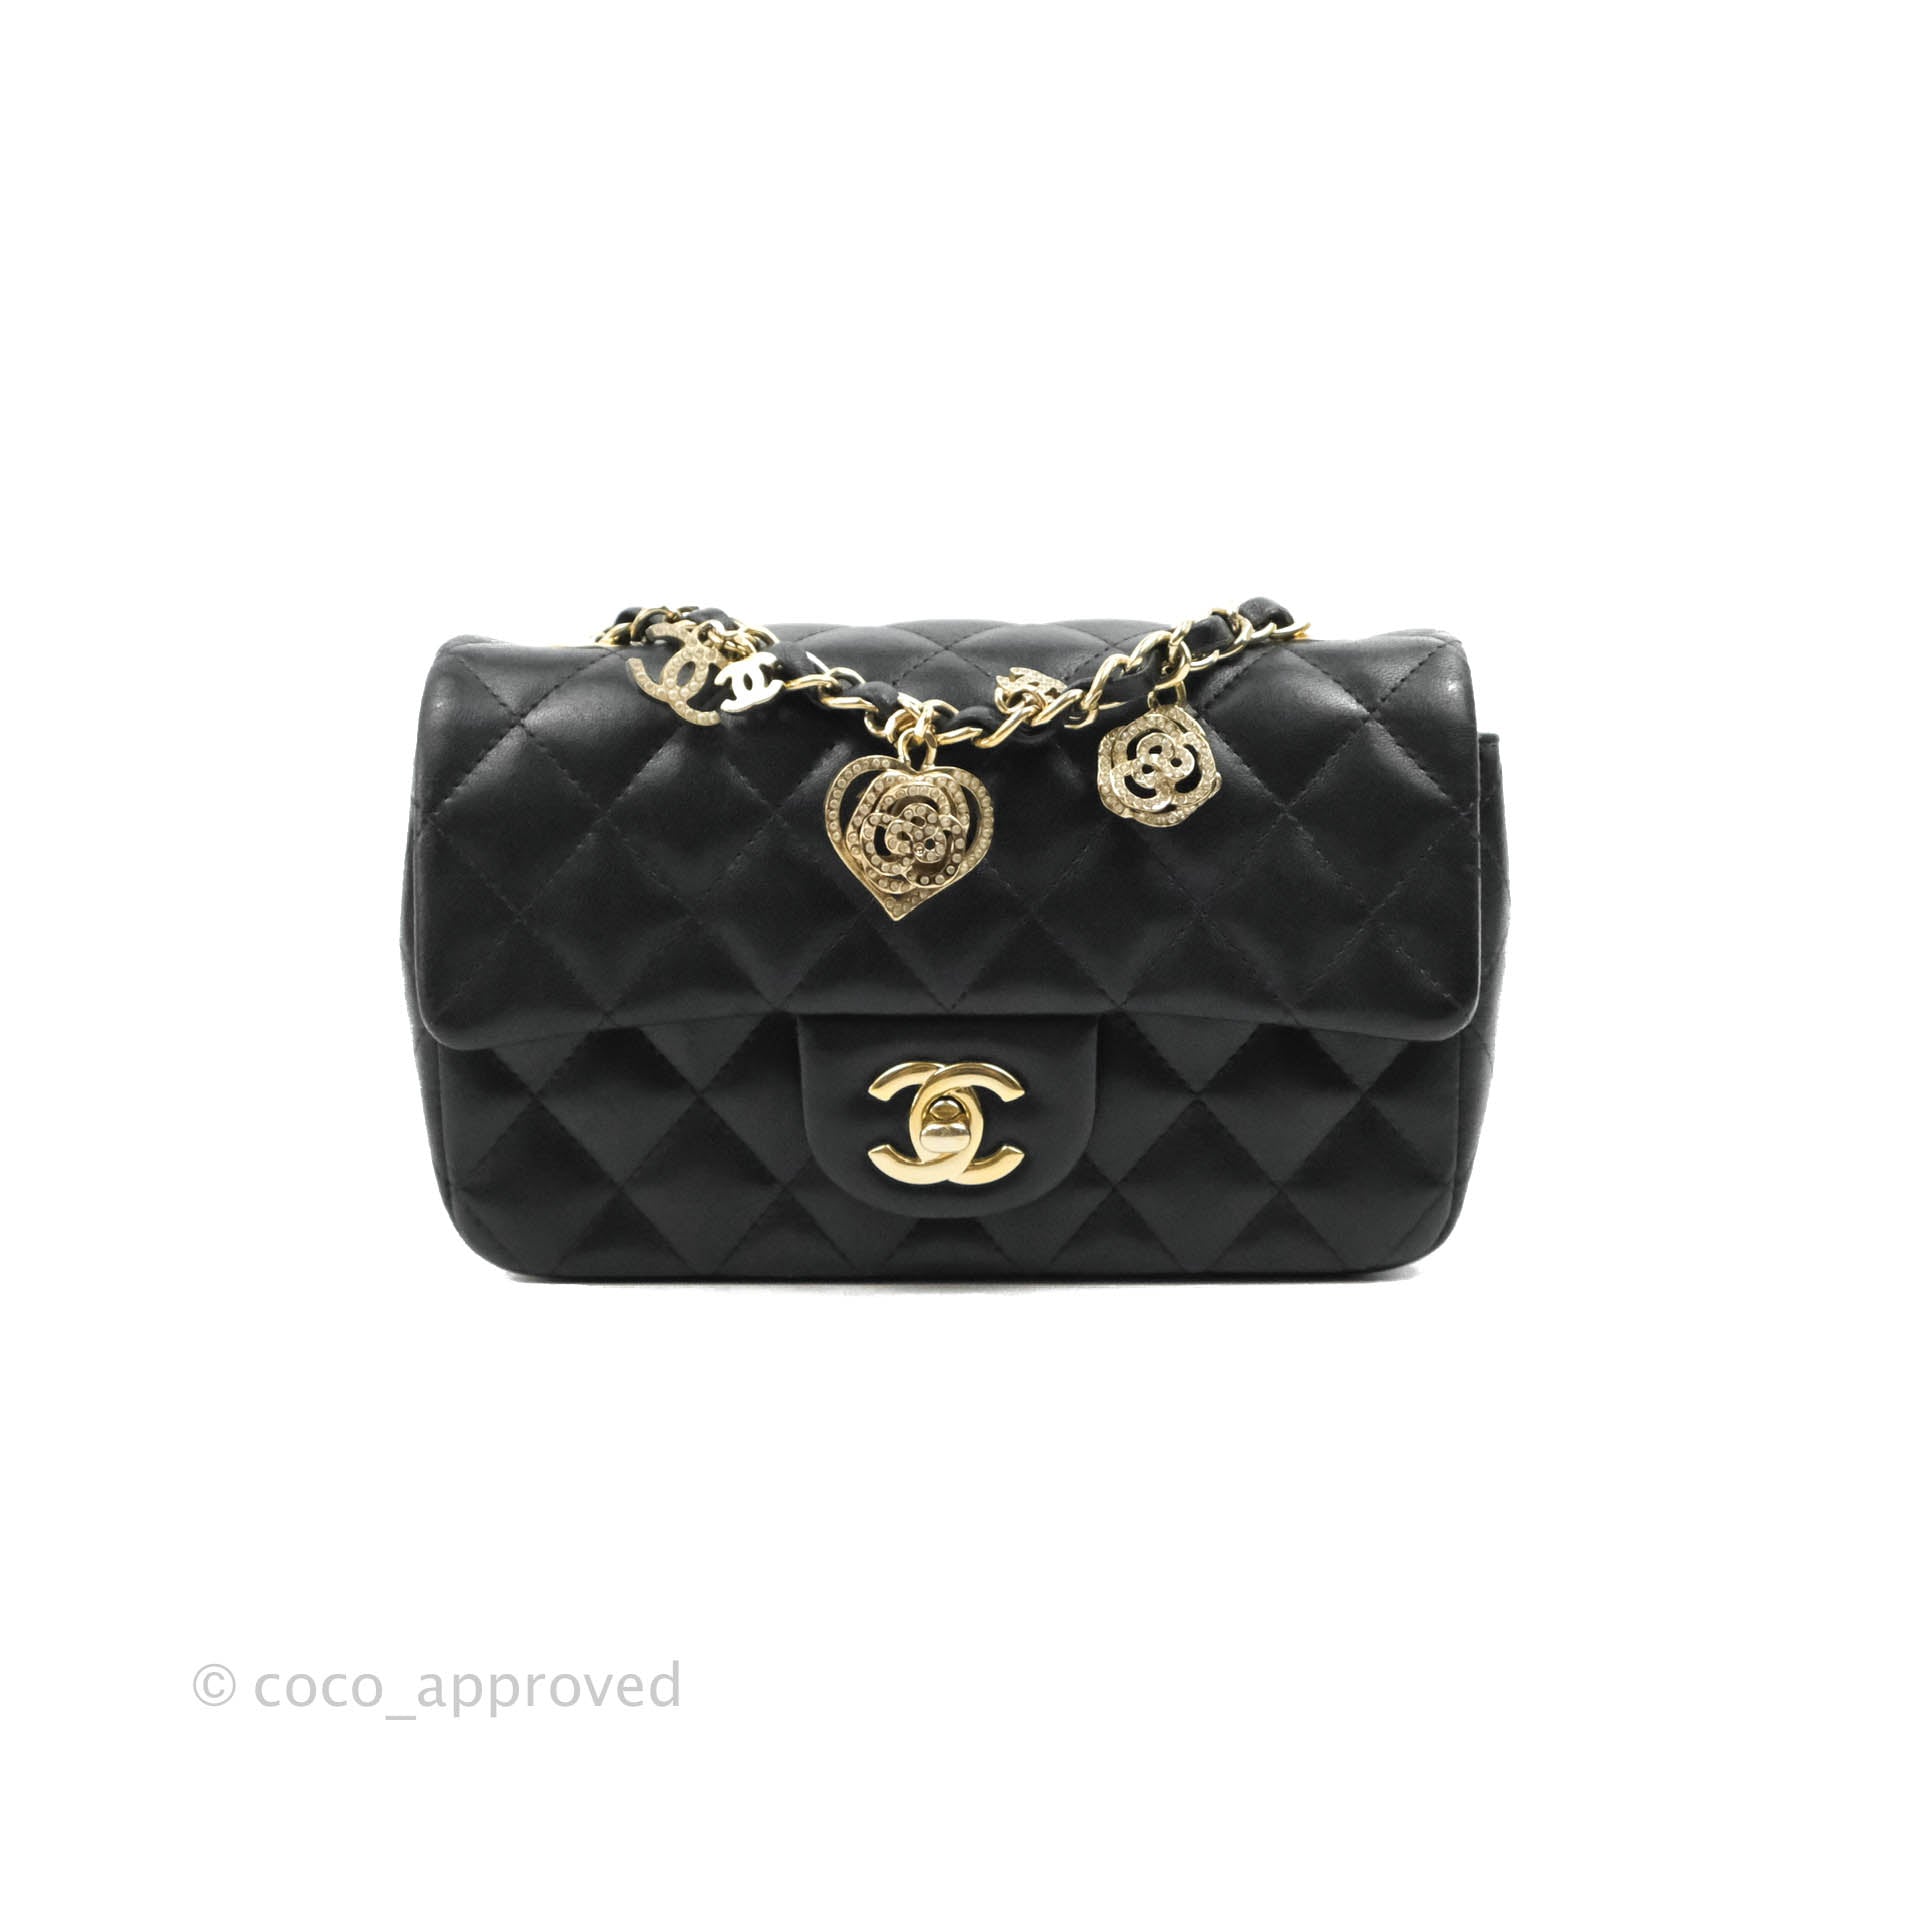 Chanel Pearl Flap Bag - 46 For Sale on 1stDibs  chanel chic pearls flap bag,  chanel pearl crush bag, chanel mini pearl flap bag